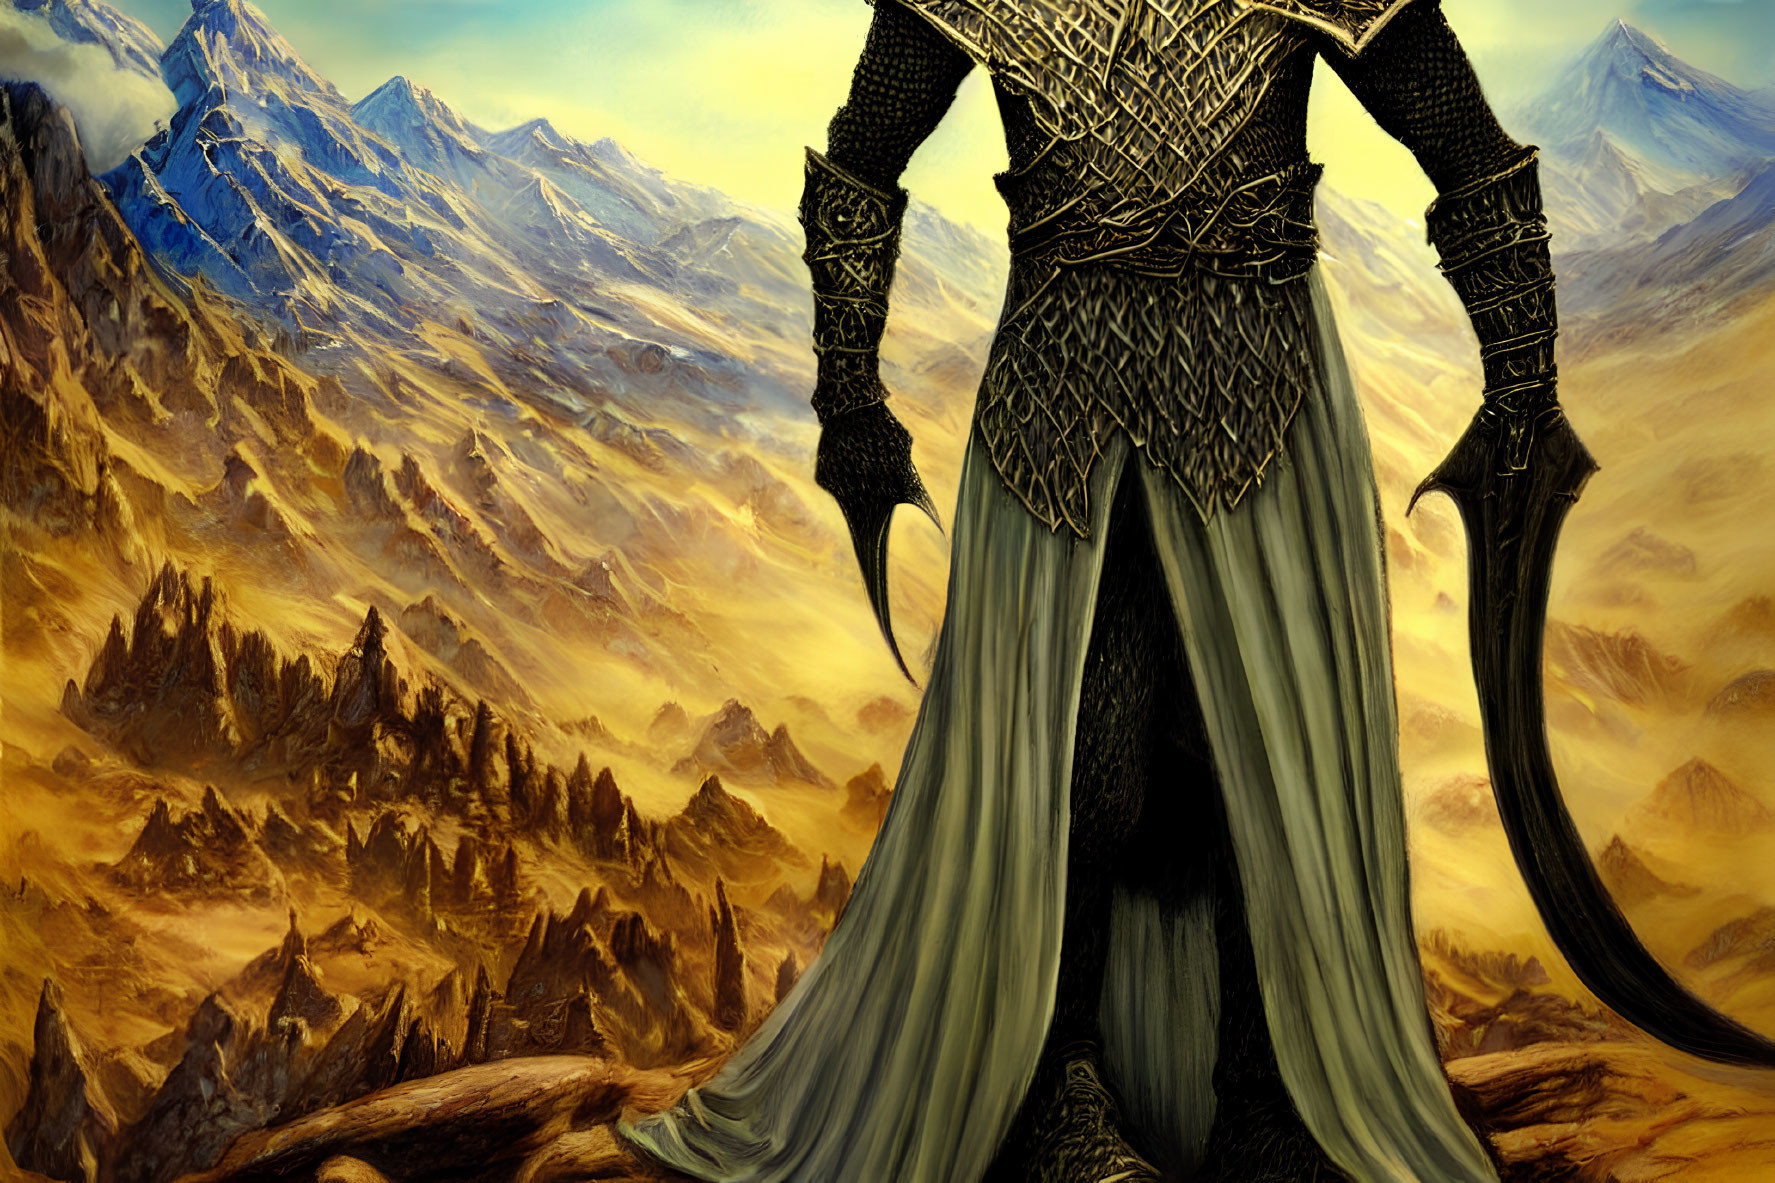 Elaborate armor fantasy warrior in surreal mountain landscape